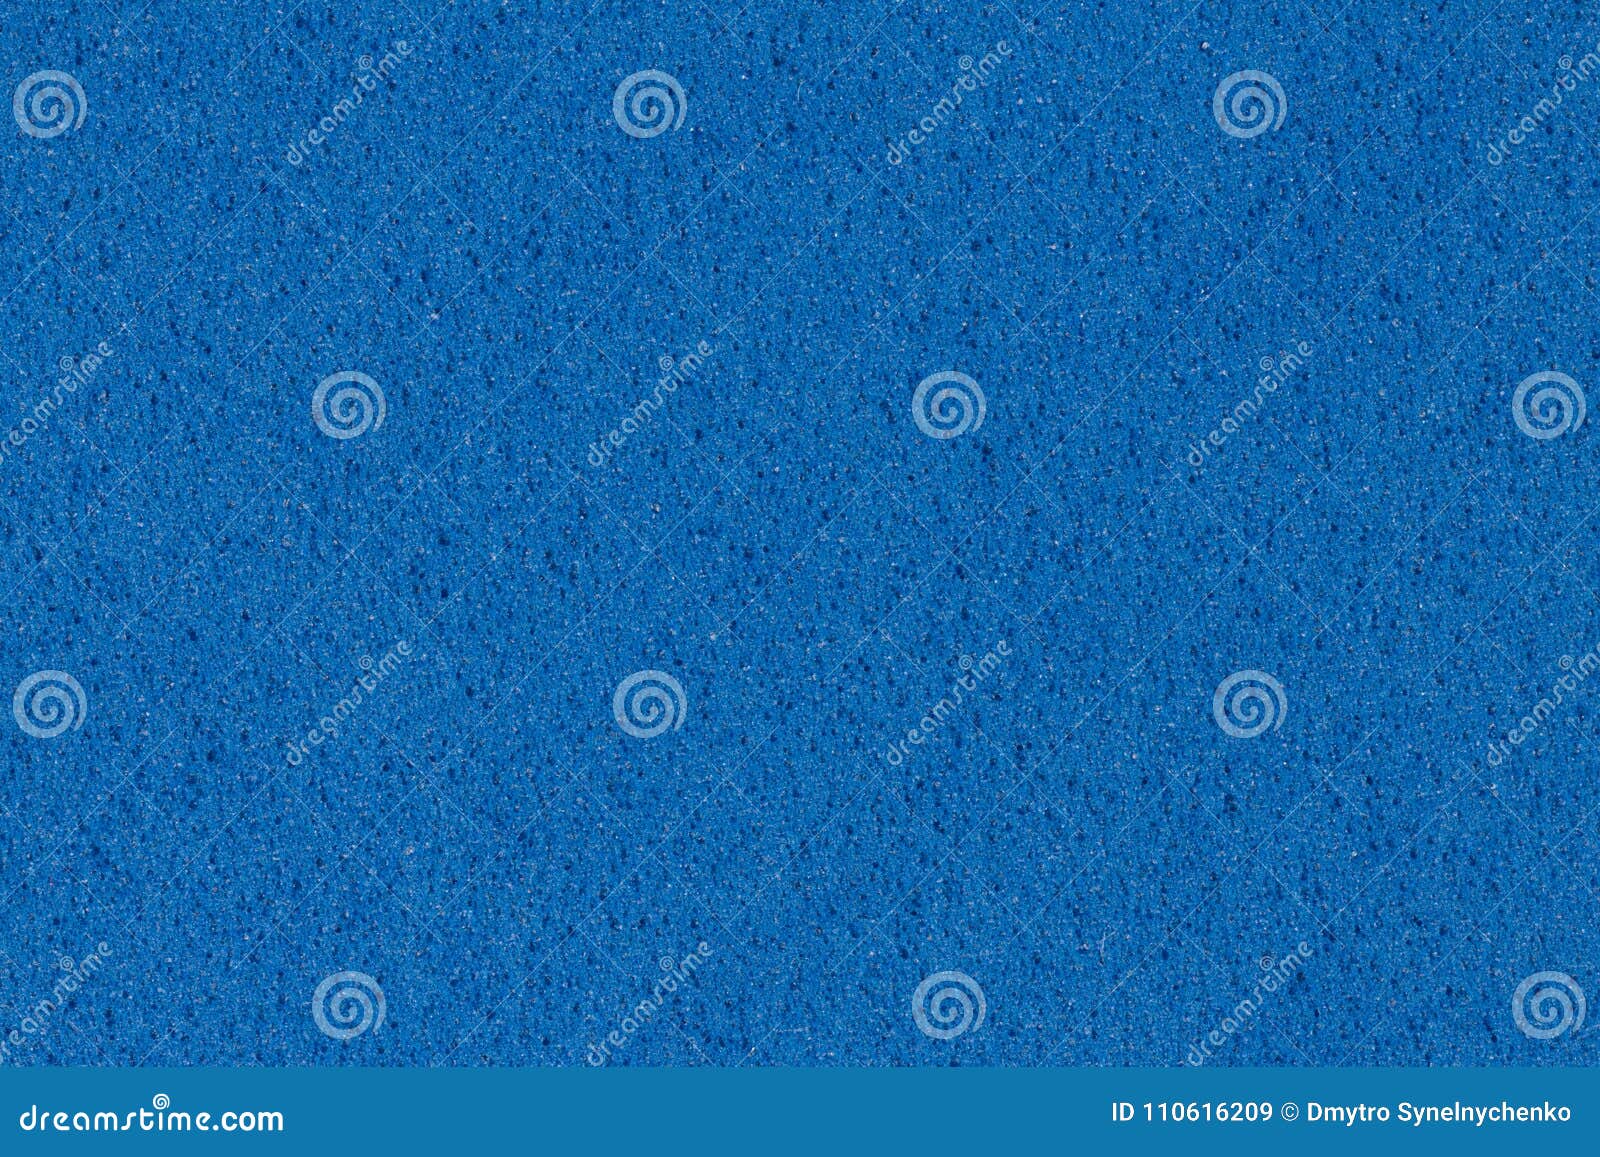 Simple Blue Ethylene Vinyl Acetate EVA Texture. Stock Image - Image of ...